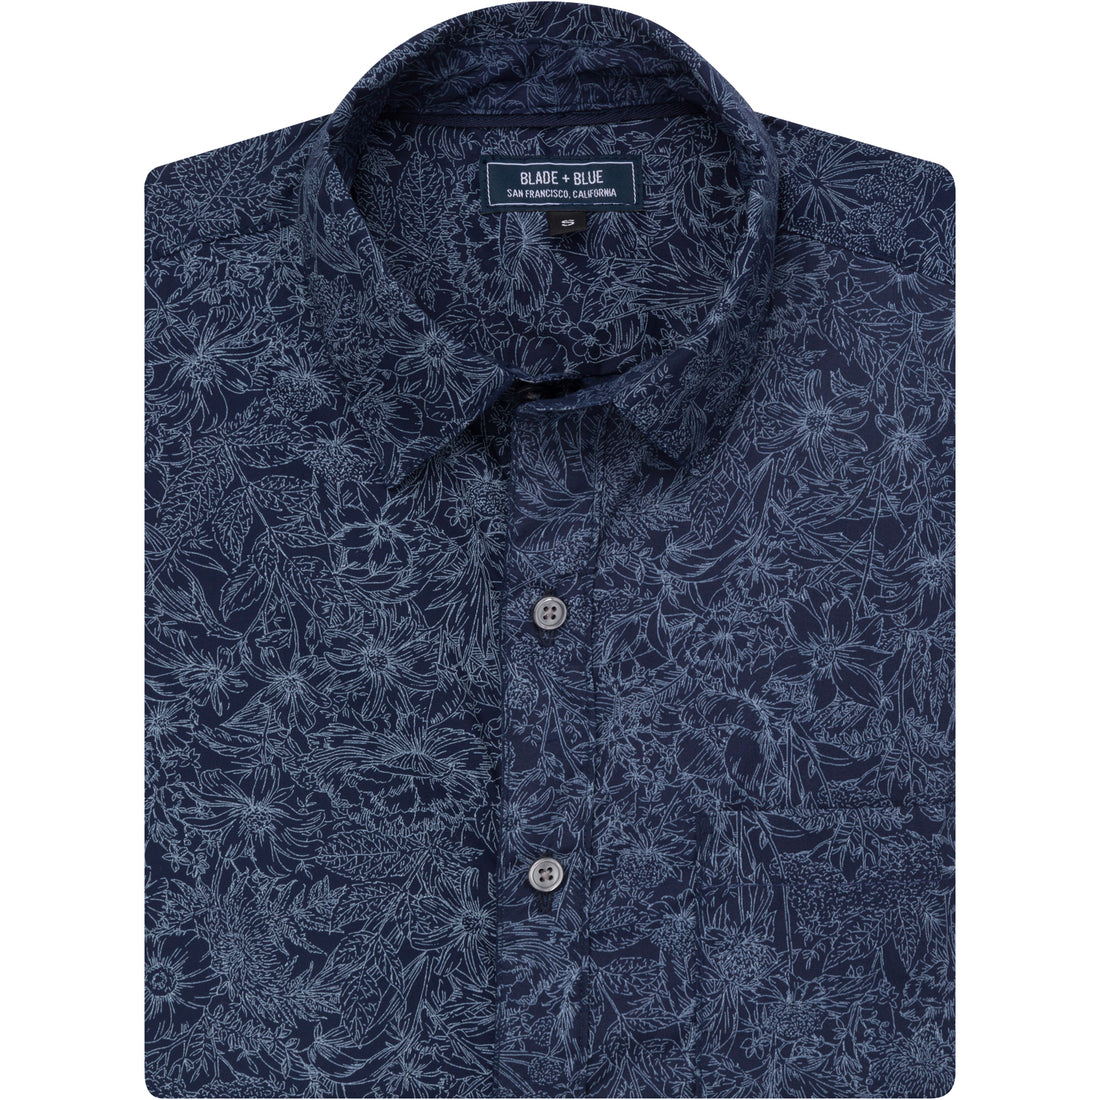 KORY Short Sleeve Shirt in Indigo Blue Drawn Floral Print